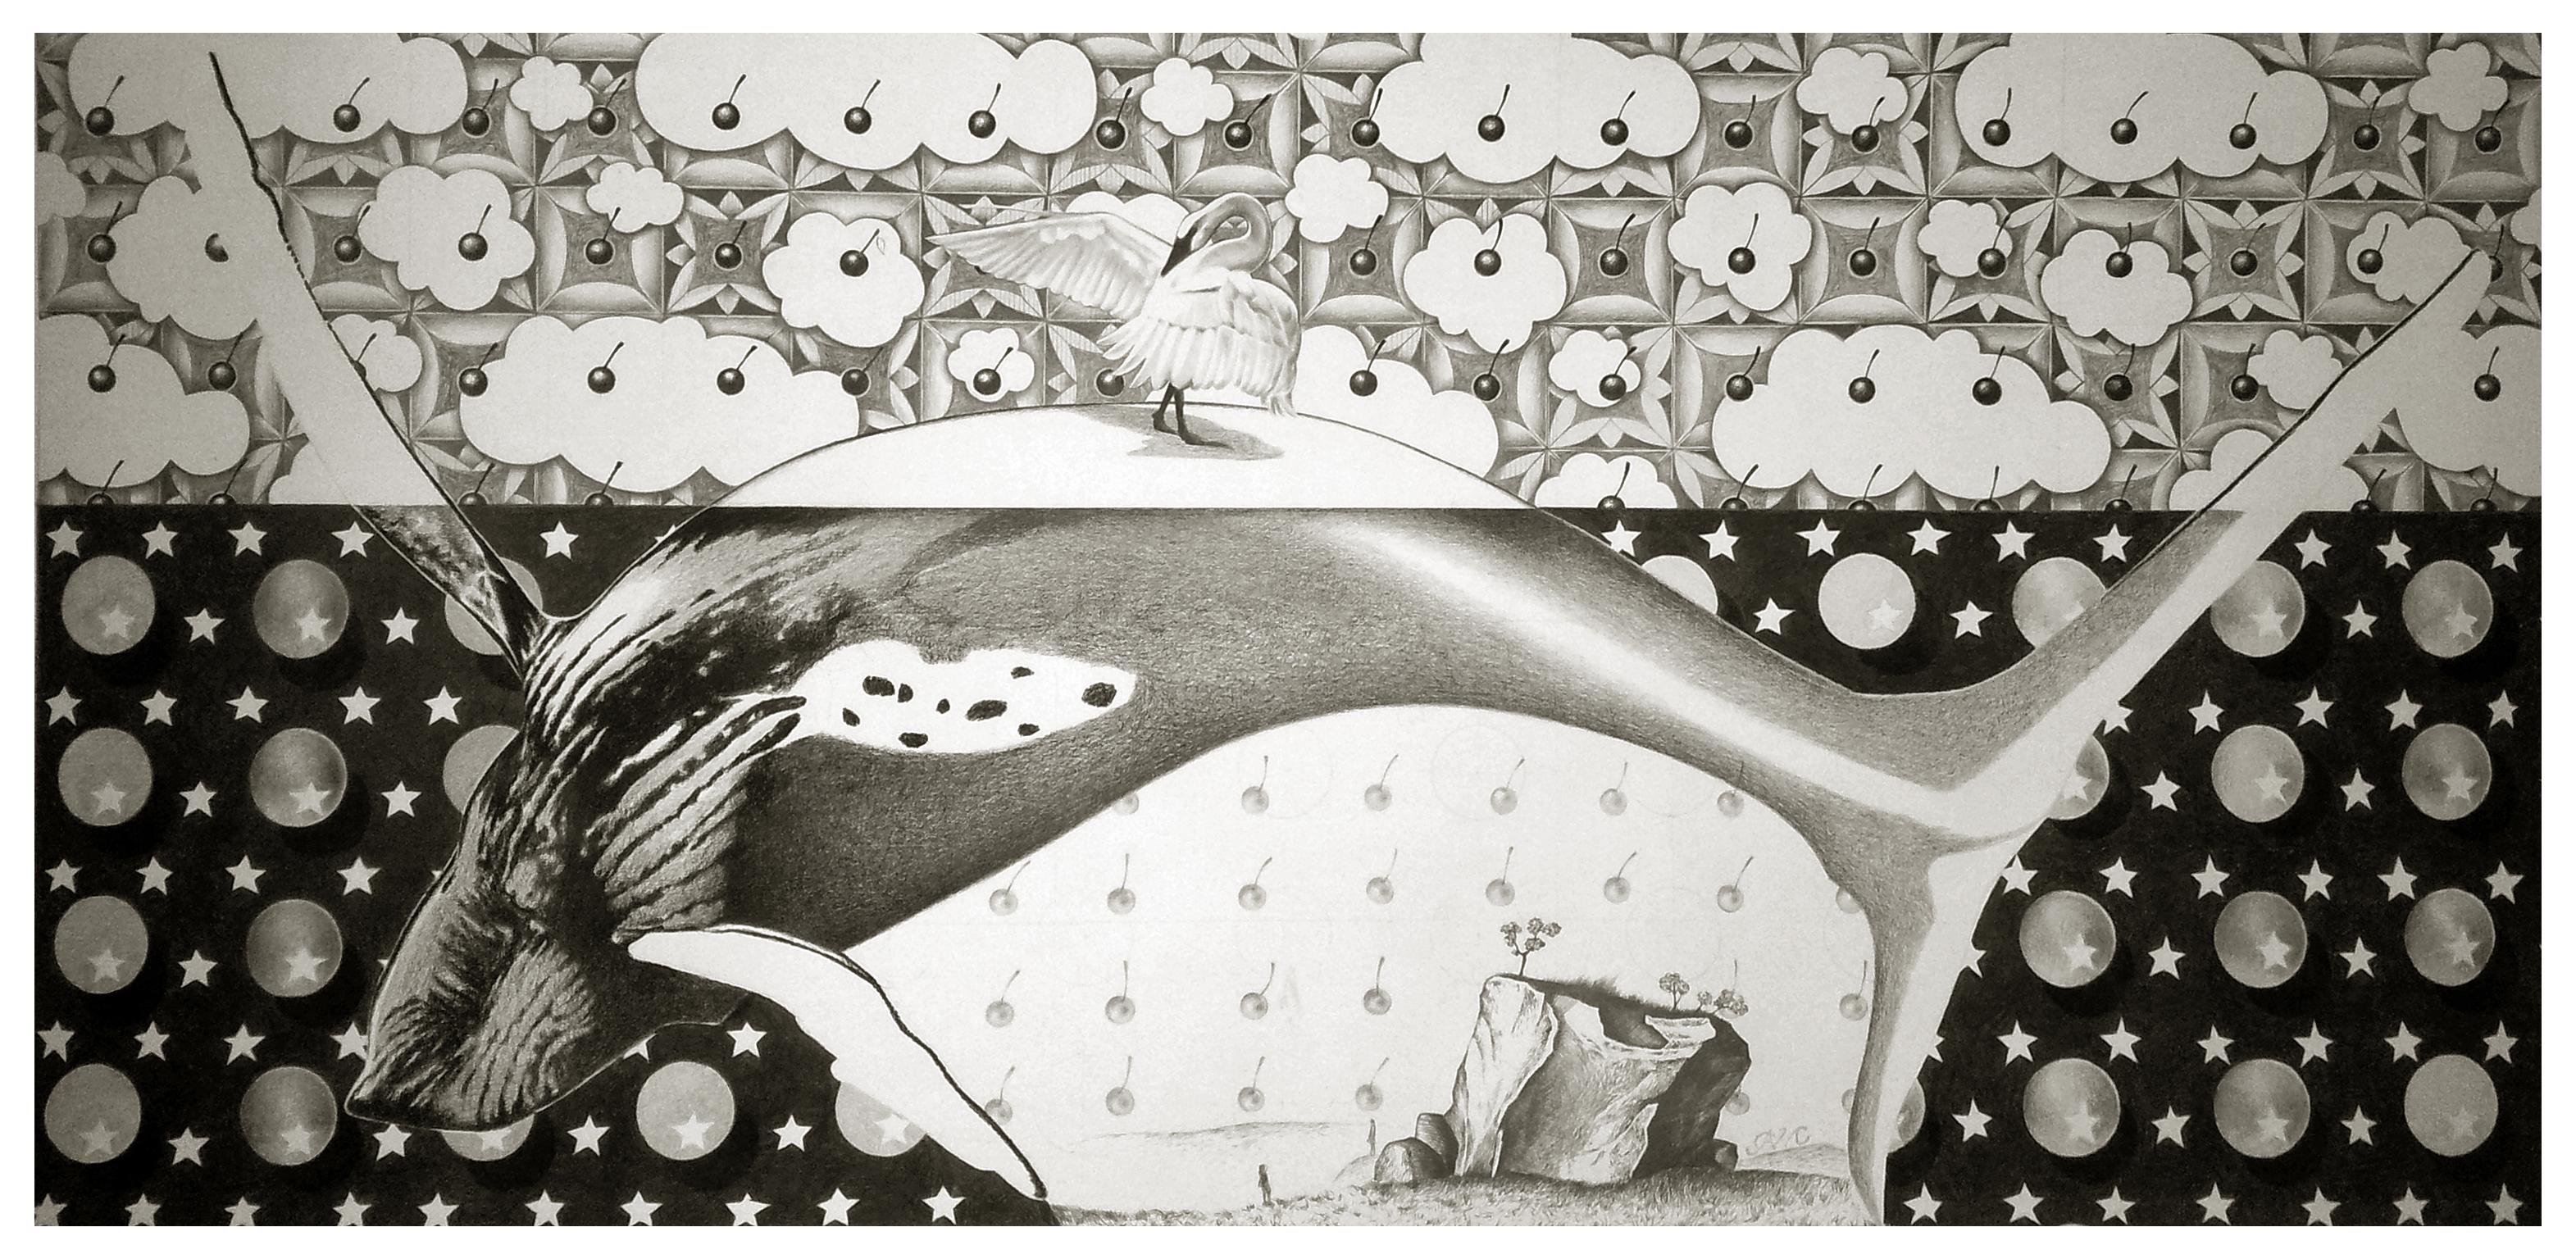 Anna Malinowska Animal Art - Swan and Cherries - Contemporary Figurative Elaborate Drawing, Large Format 